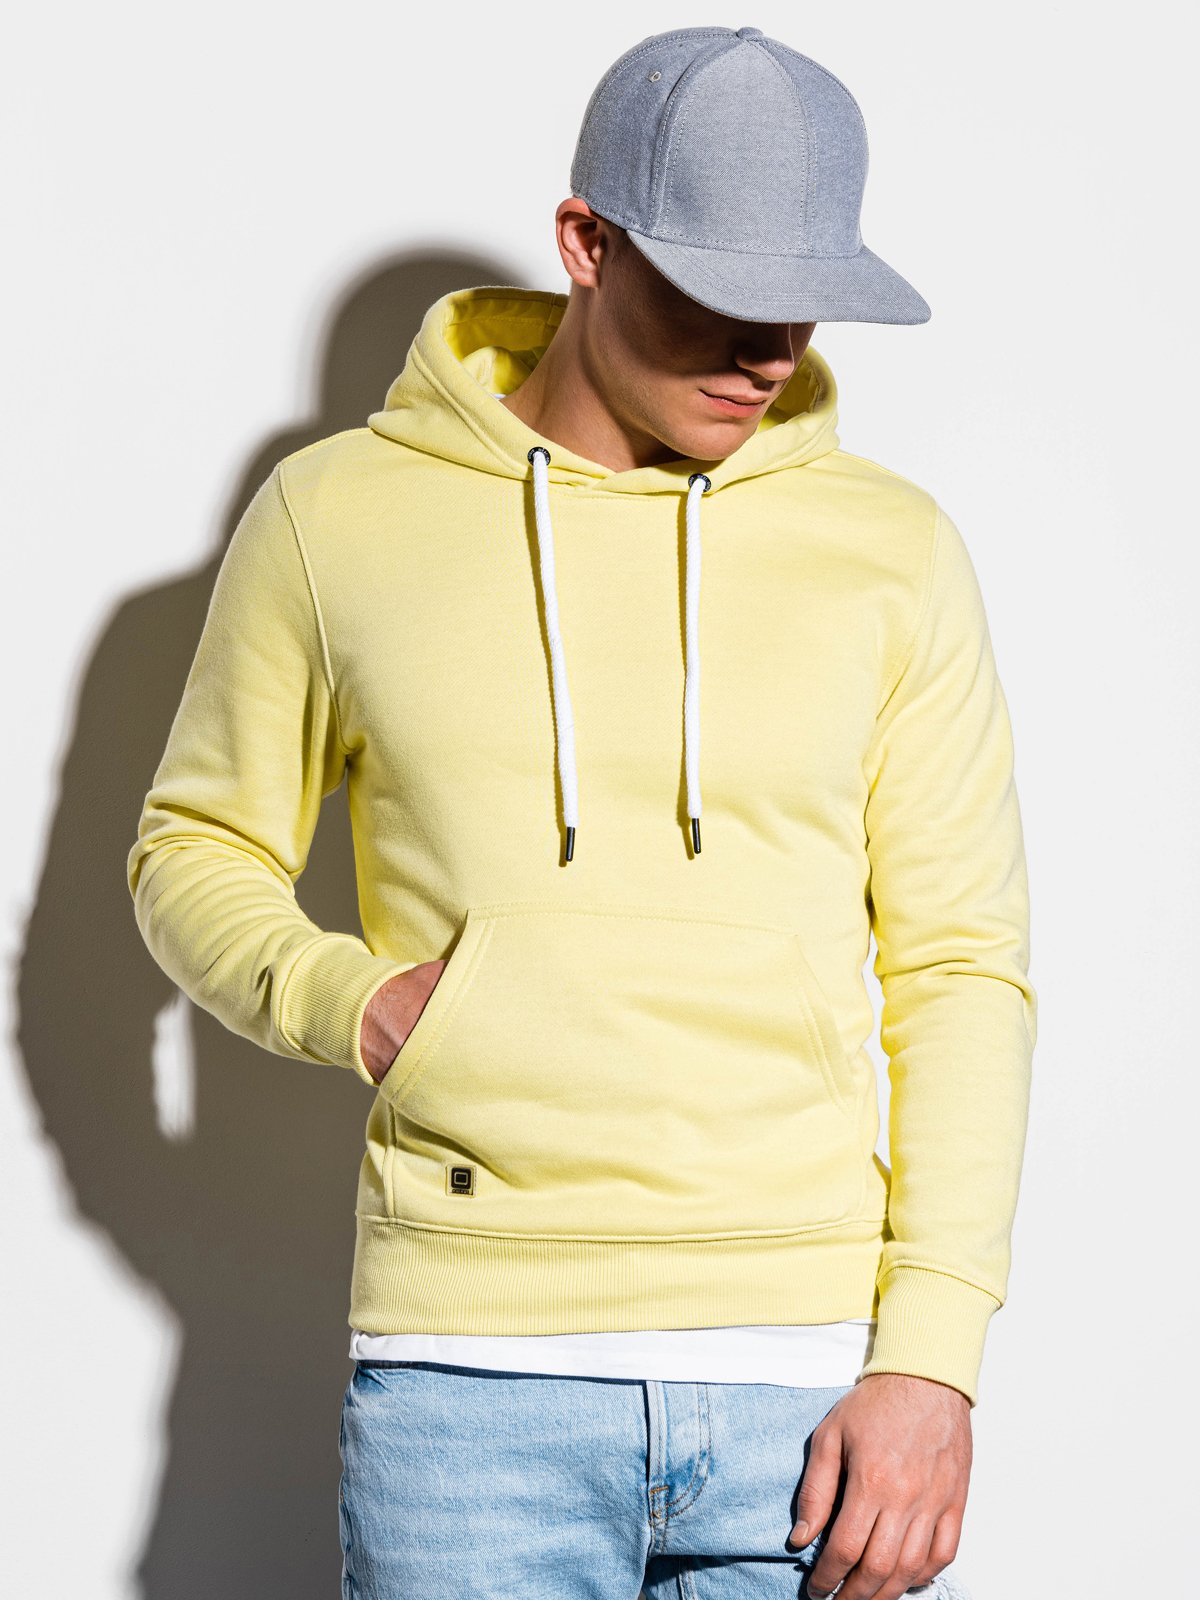 Men's hooded sweatshirt B979 - light yellow | MODONE wholesale ...